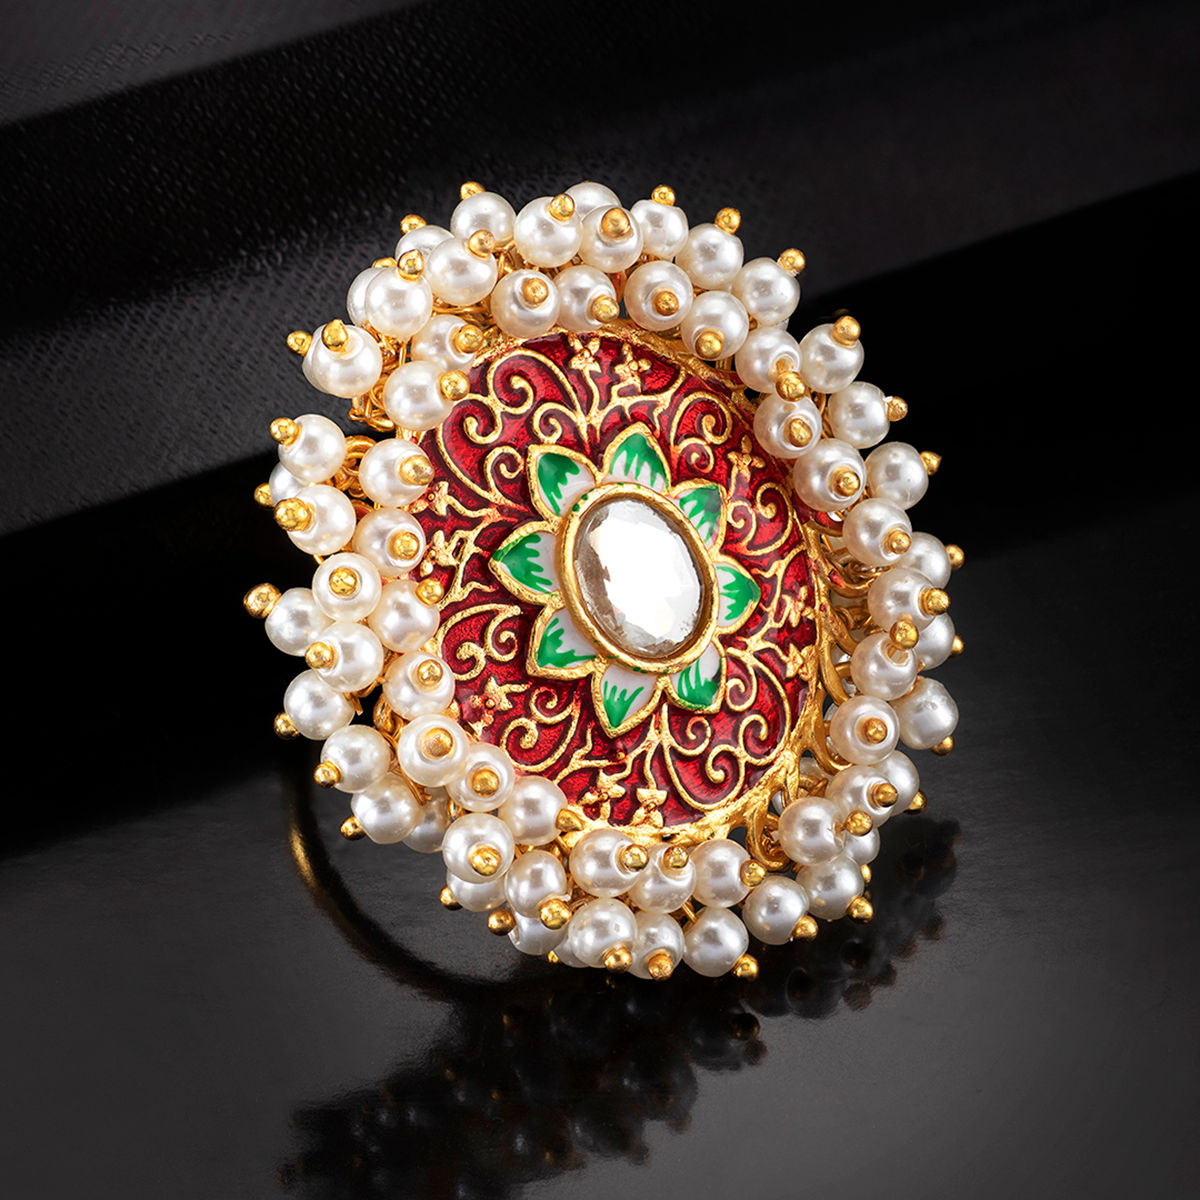 South Indian 18k Gold Plated Ethnic Designer Finger Ring Wedding Fashion  Jewelry | eBay